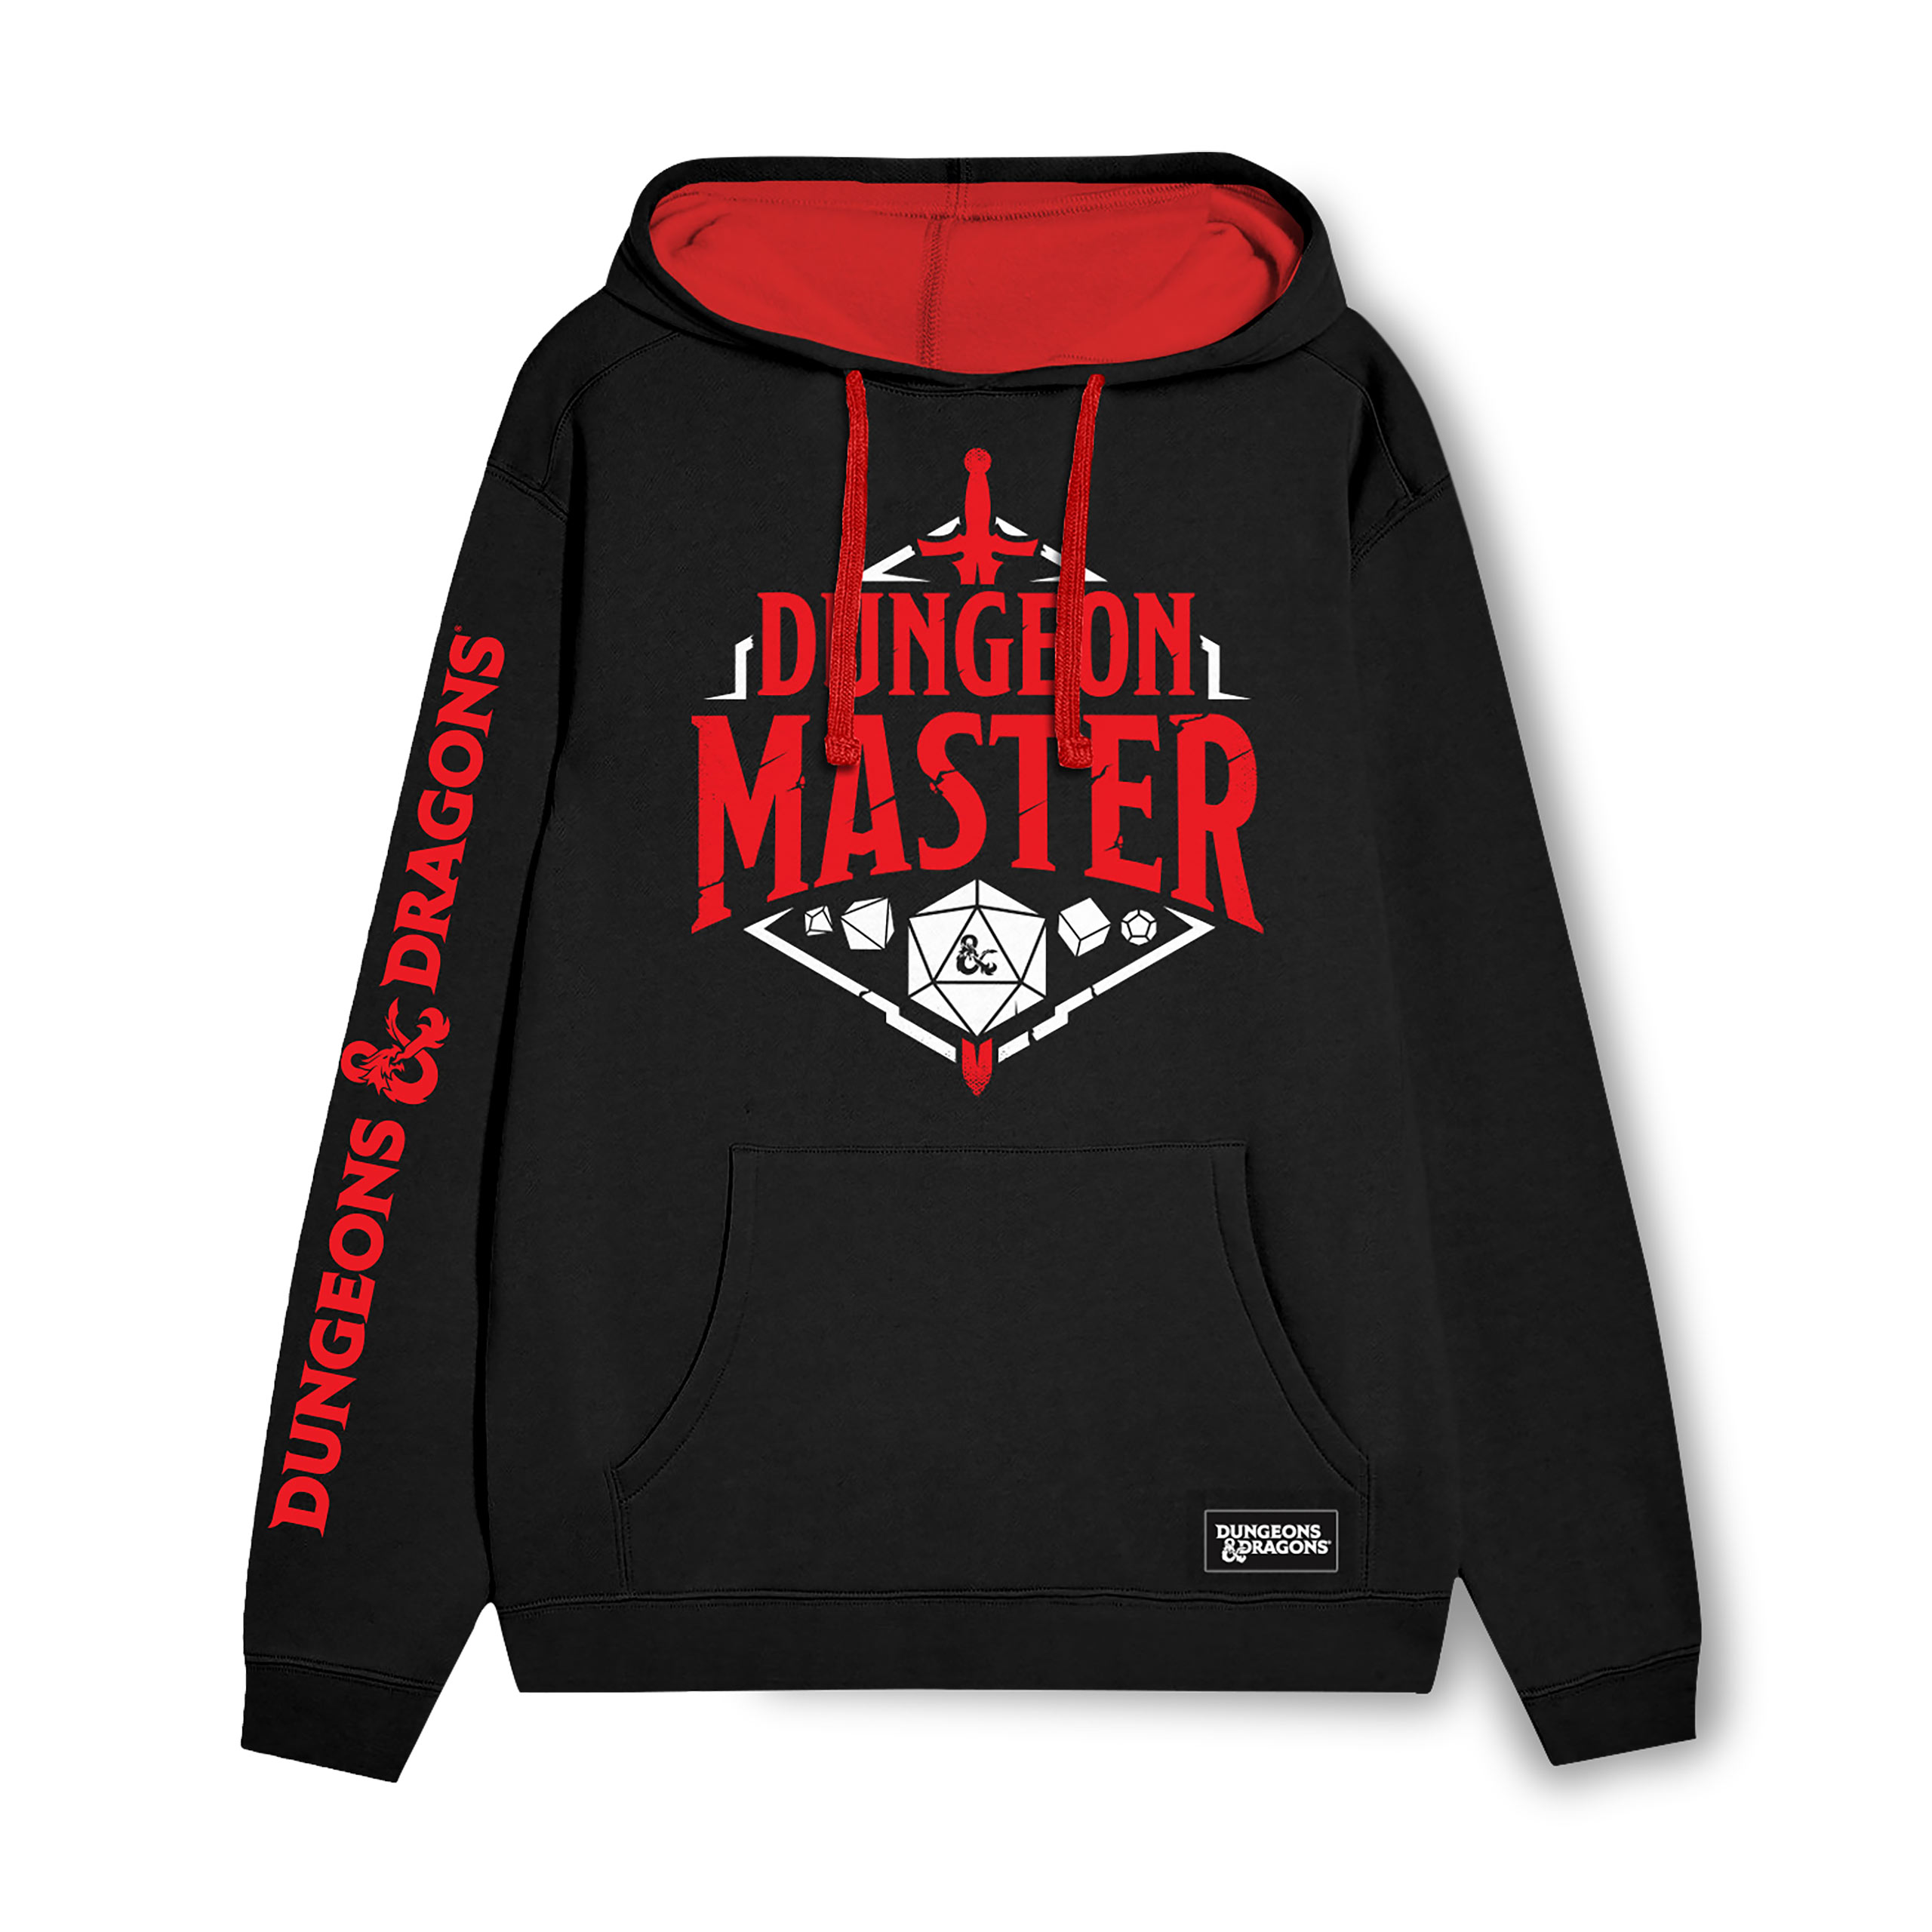 Dungeons & Dragons - Dungeon Master Hoodie